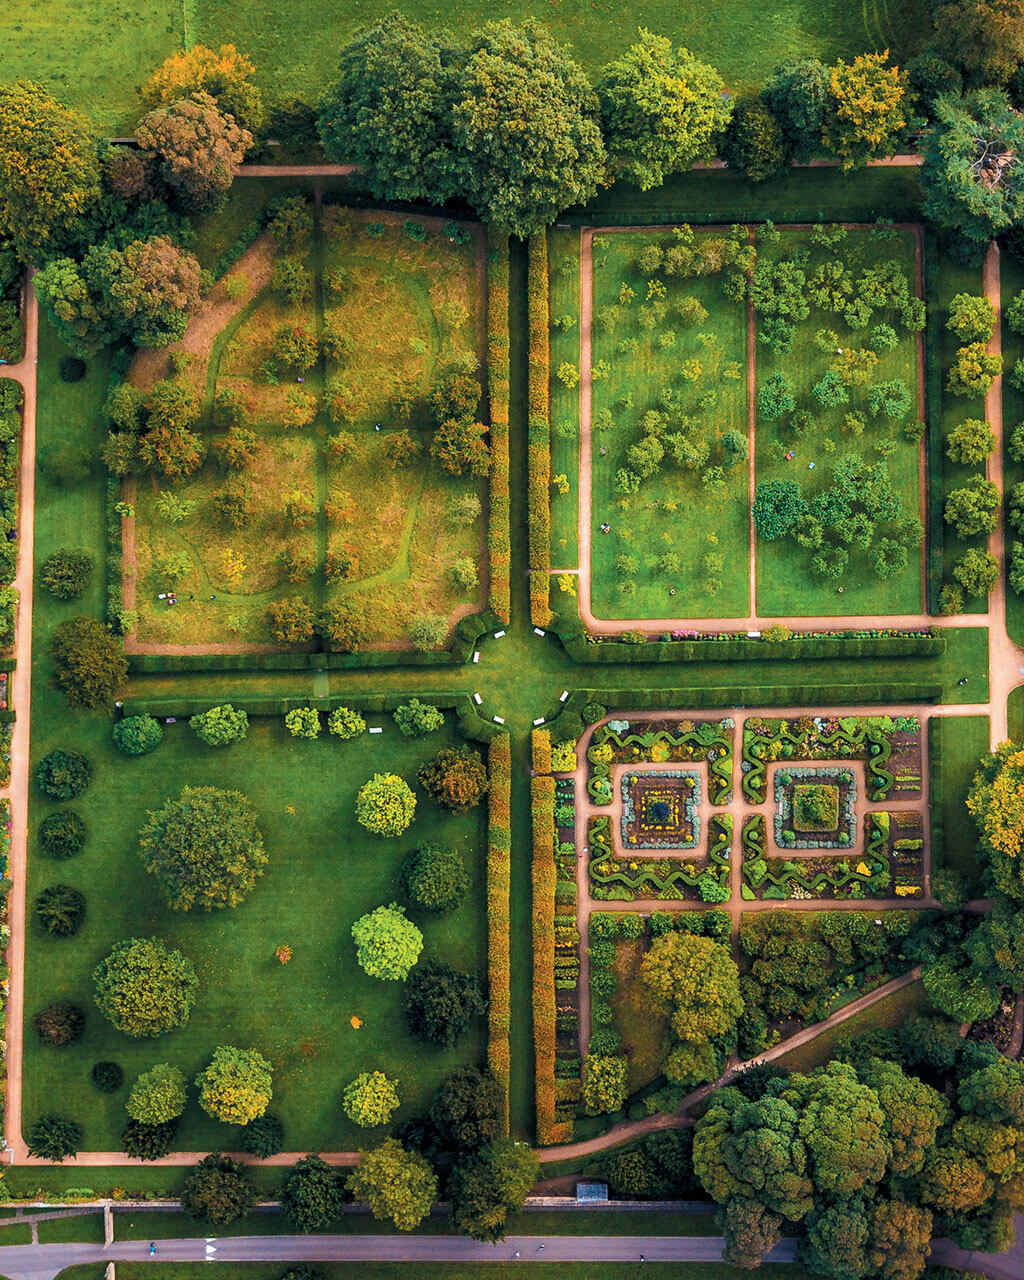 Hardwick Hall gardens drone photograph by Phil Nicholls